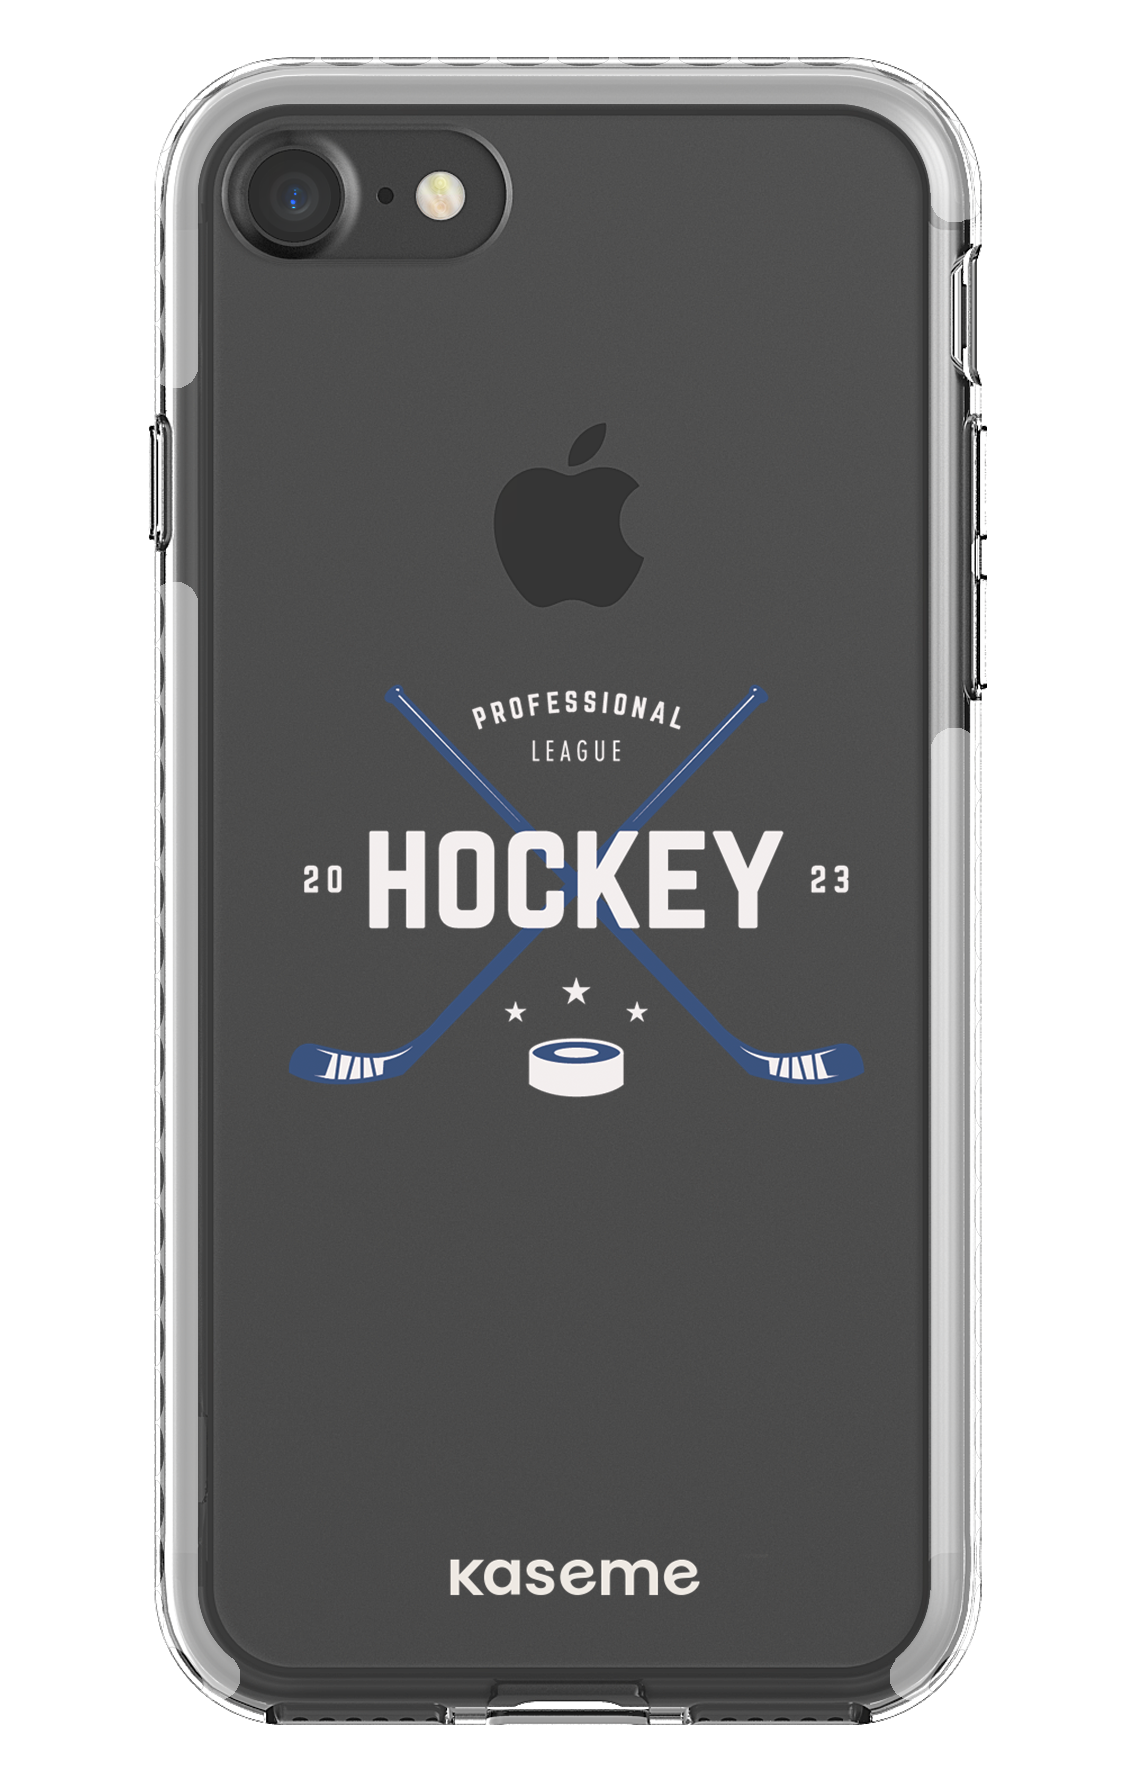 Playoffs clear case - iPhone 8